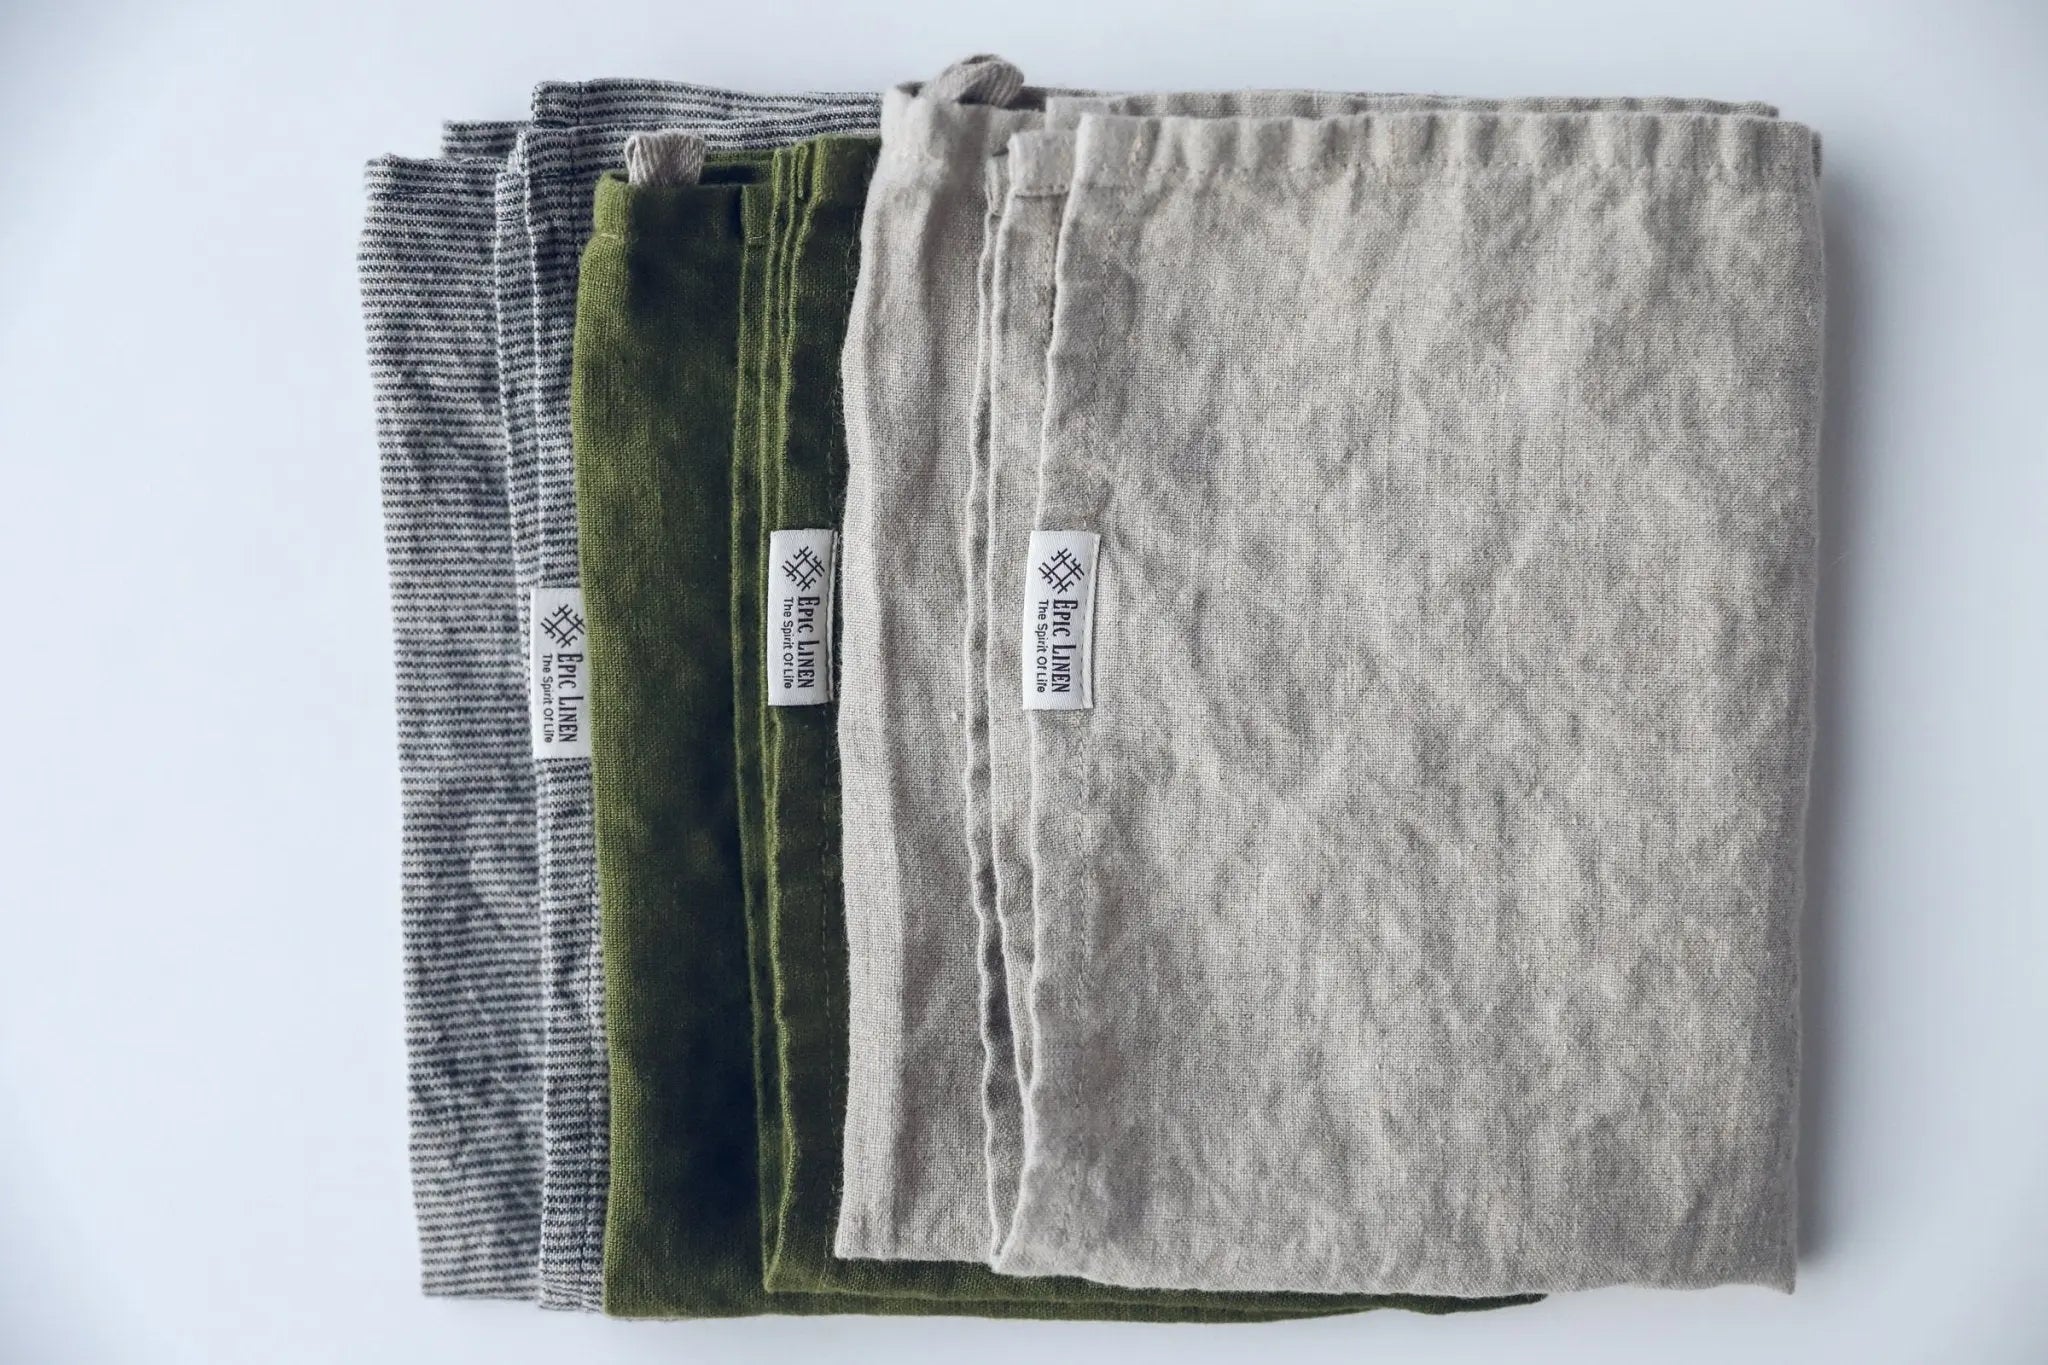 Set of 3 Stonewashed Linen Napkins - Epic Linen luxury linen